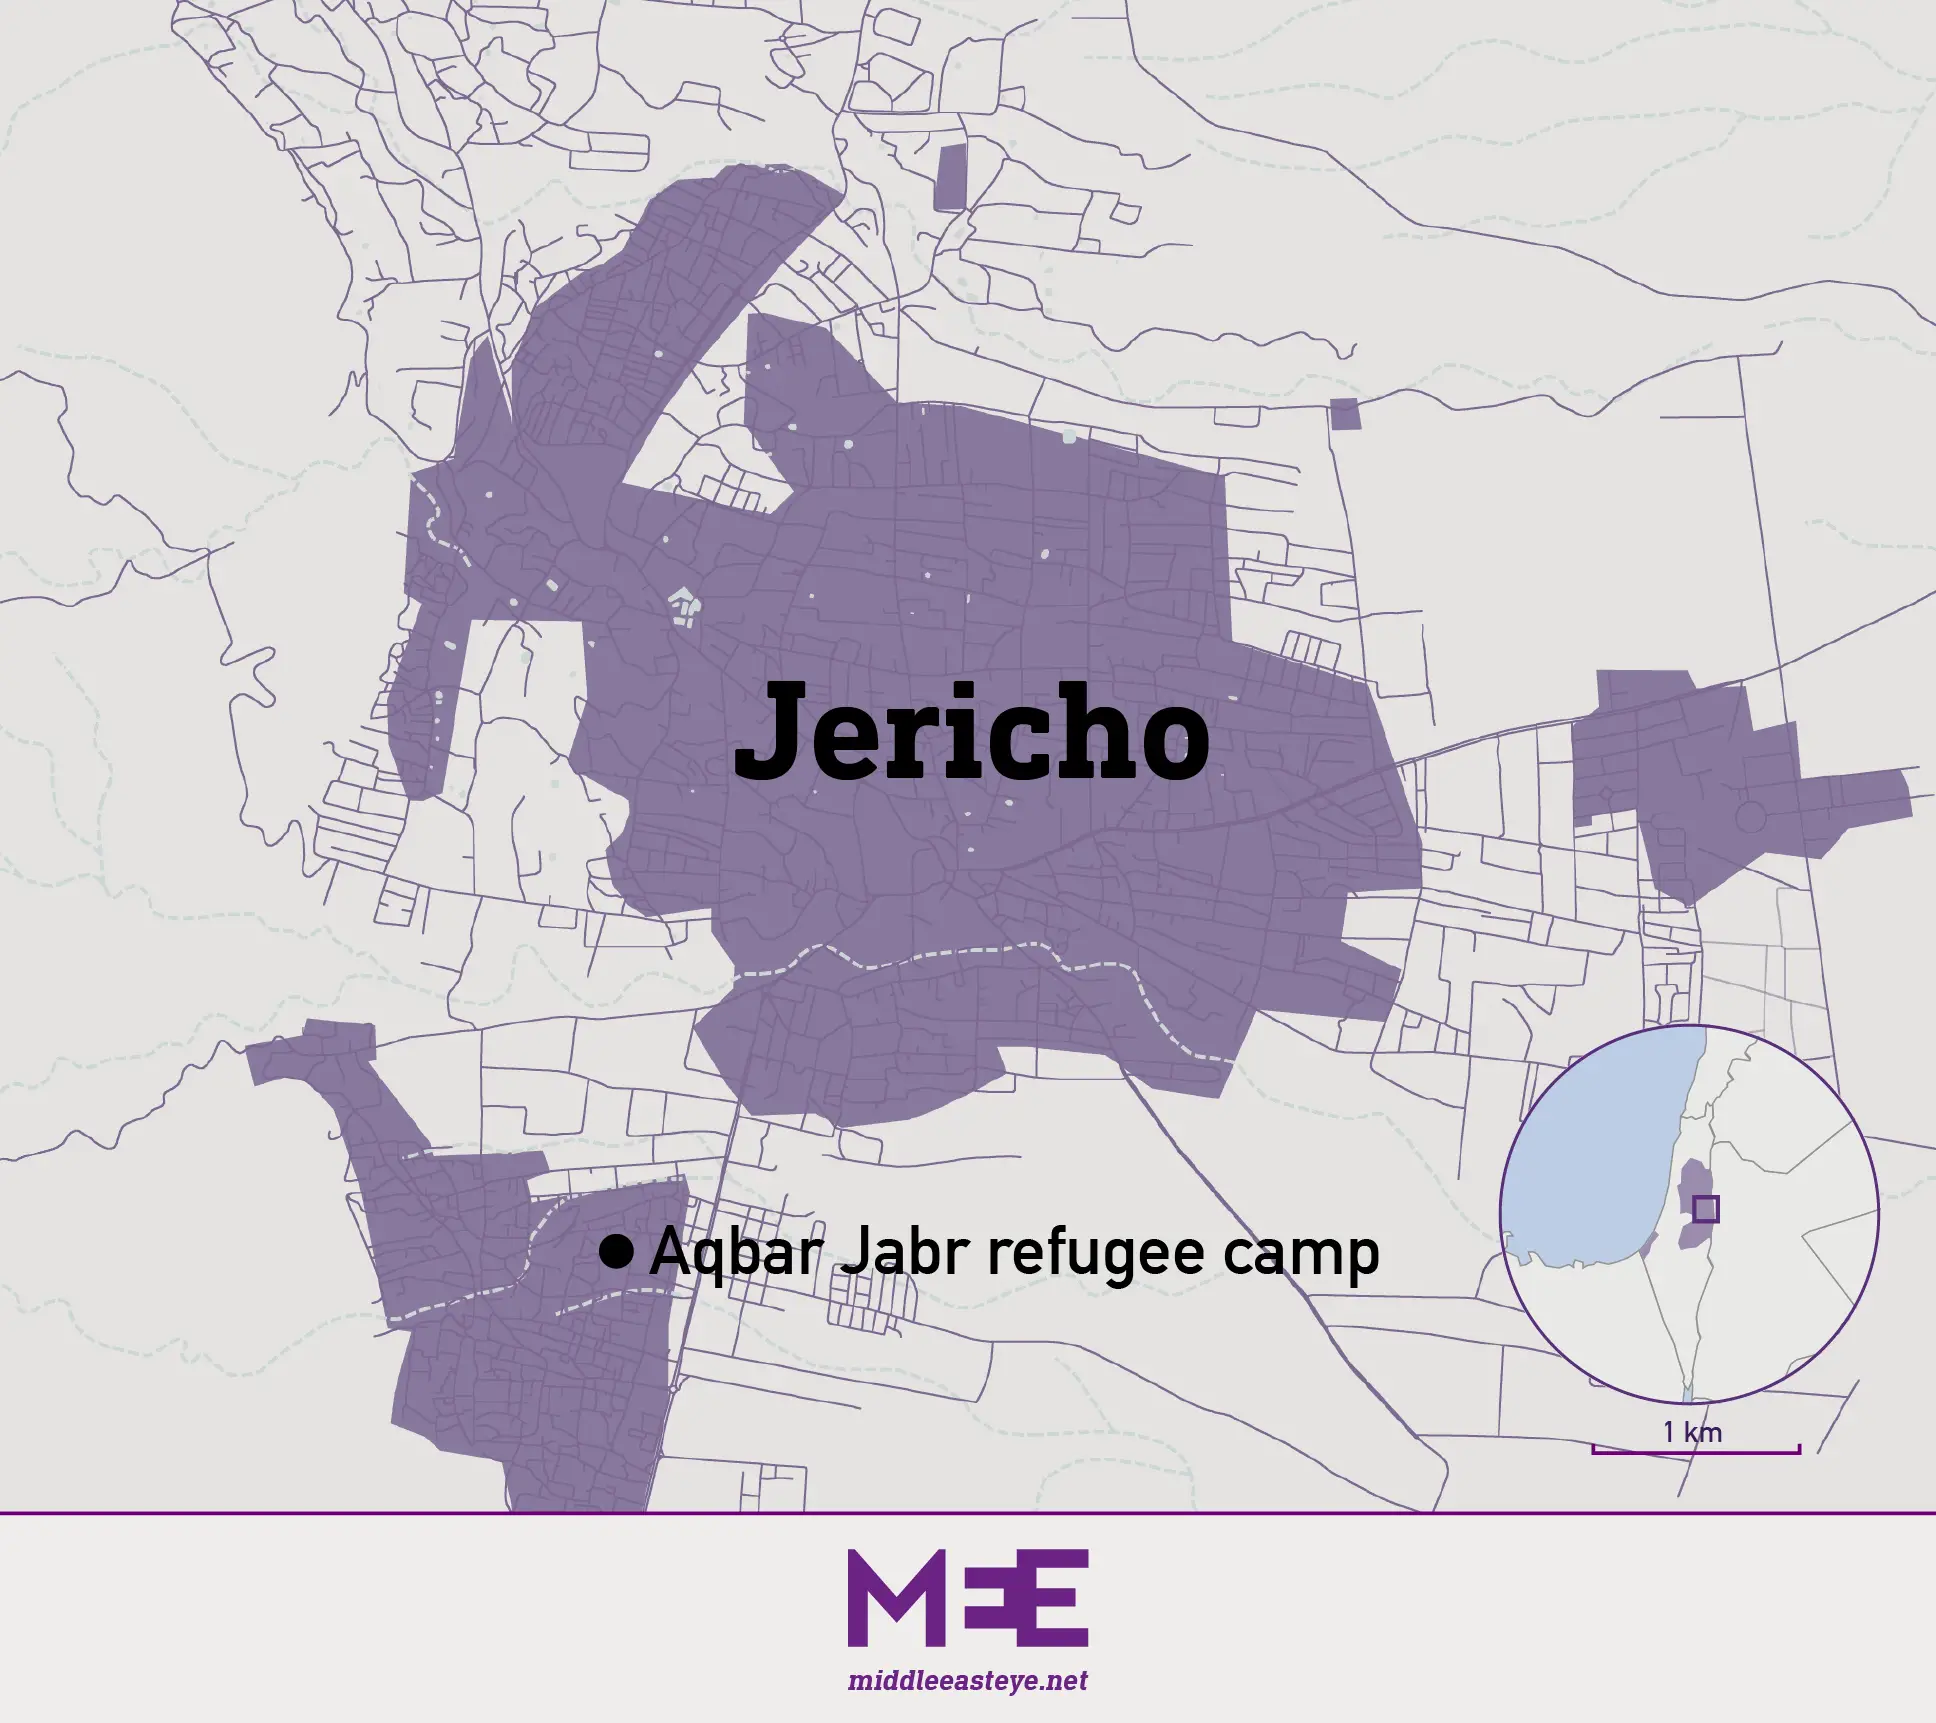 map of jericho and aqbat jabr refugee camp